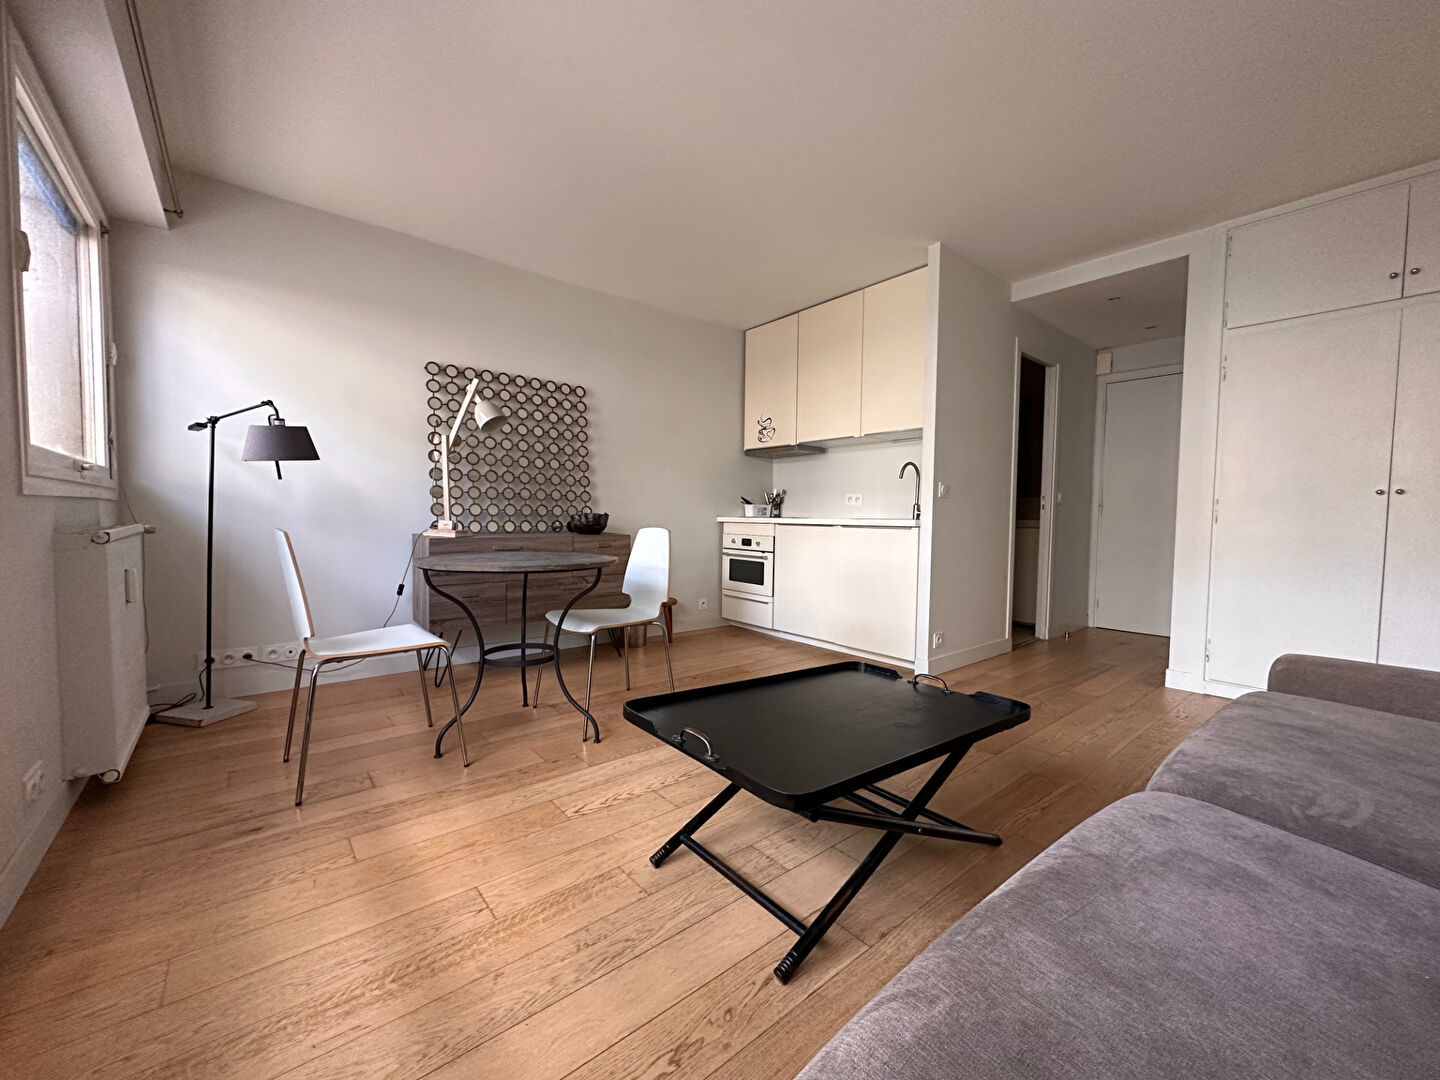 Appartement a louer neuilly-sur-seine - 1 pièce(s) - 26.09 m2 - Surfyn